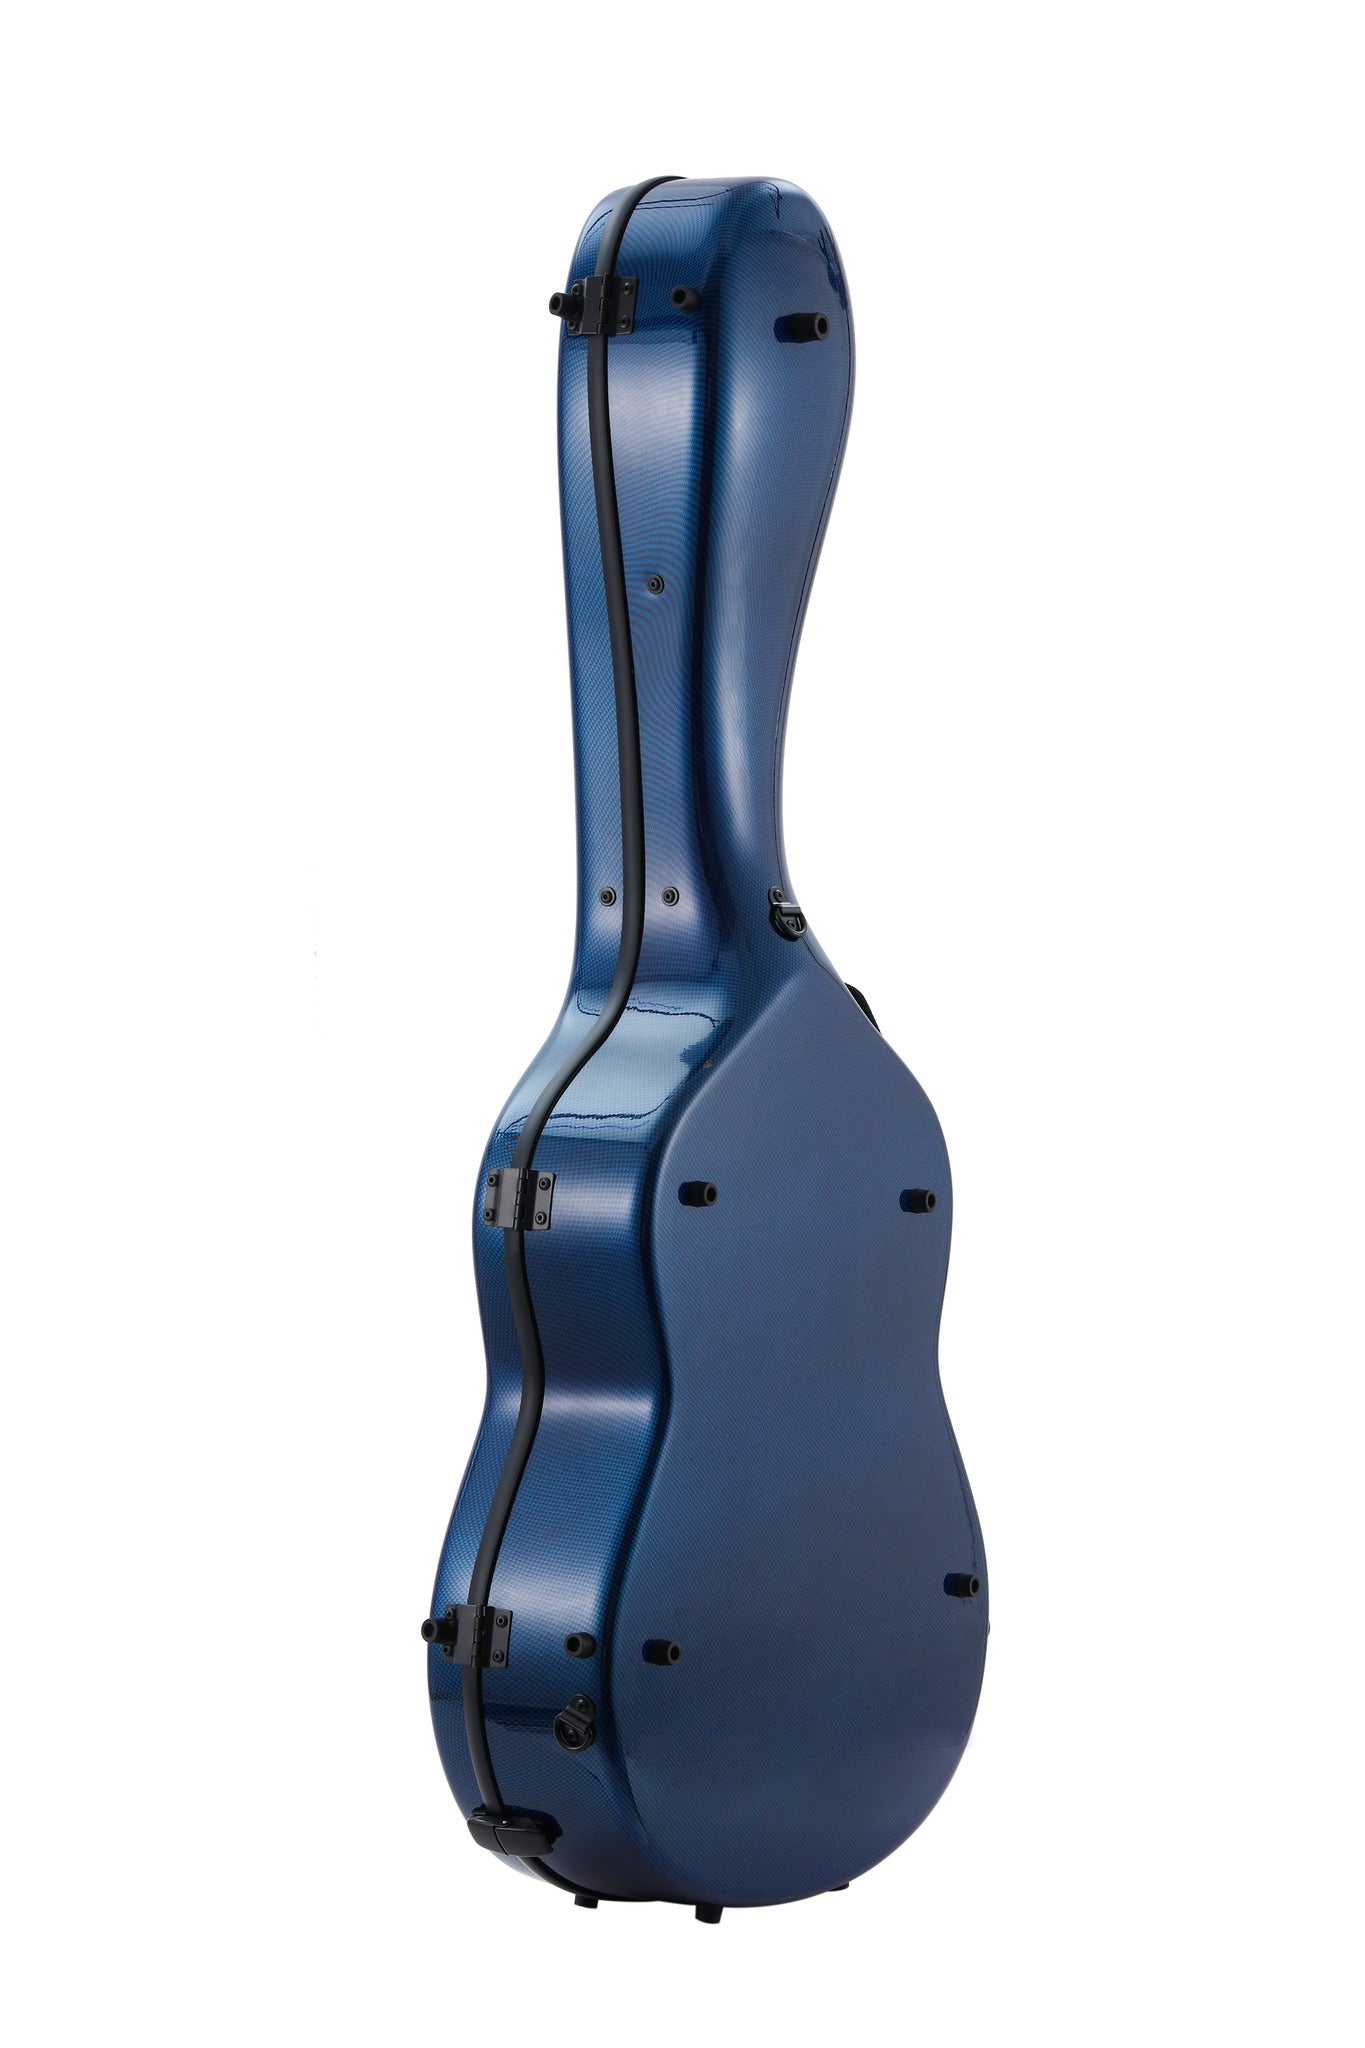 Custodia Alba Guitar Beads, motivo carbonio blu lucido, per chitarra classica, acustica, chitarra flamenco